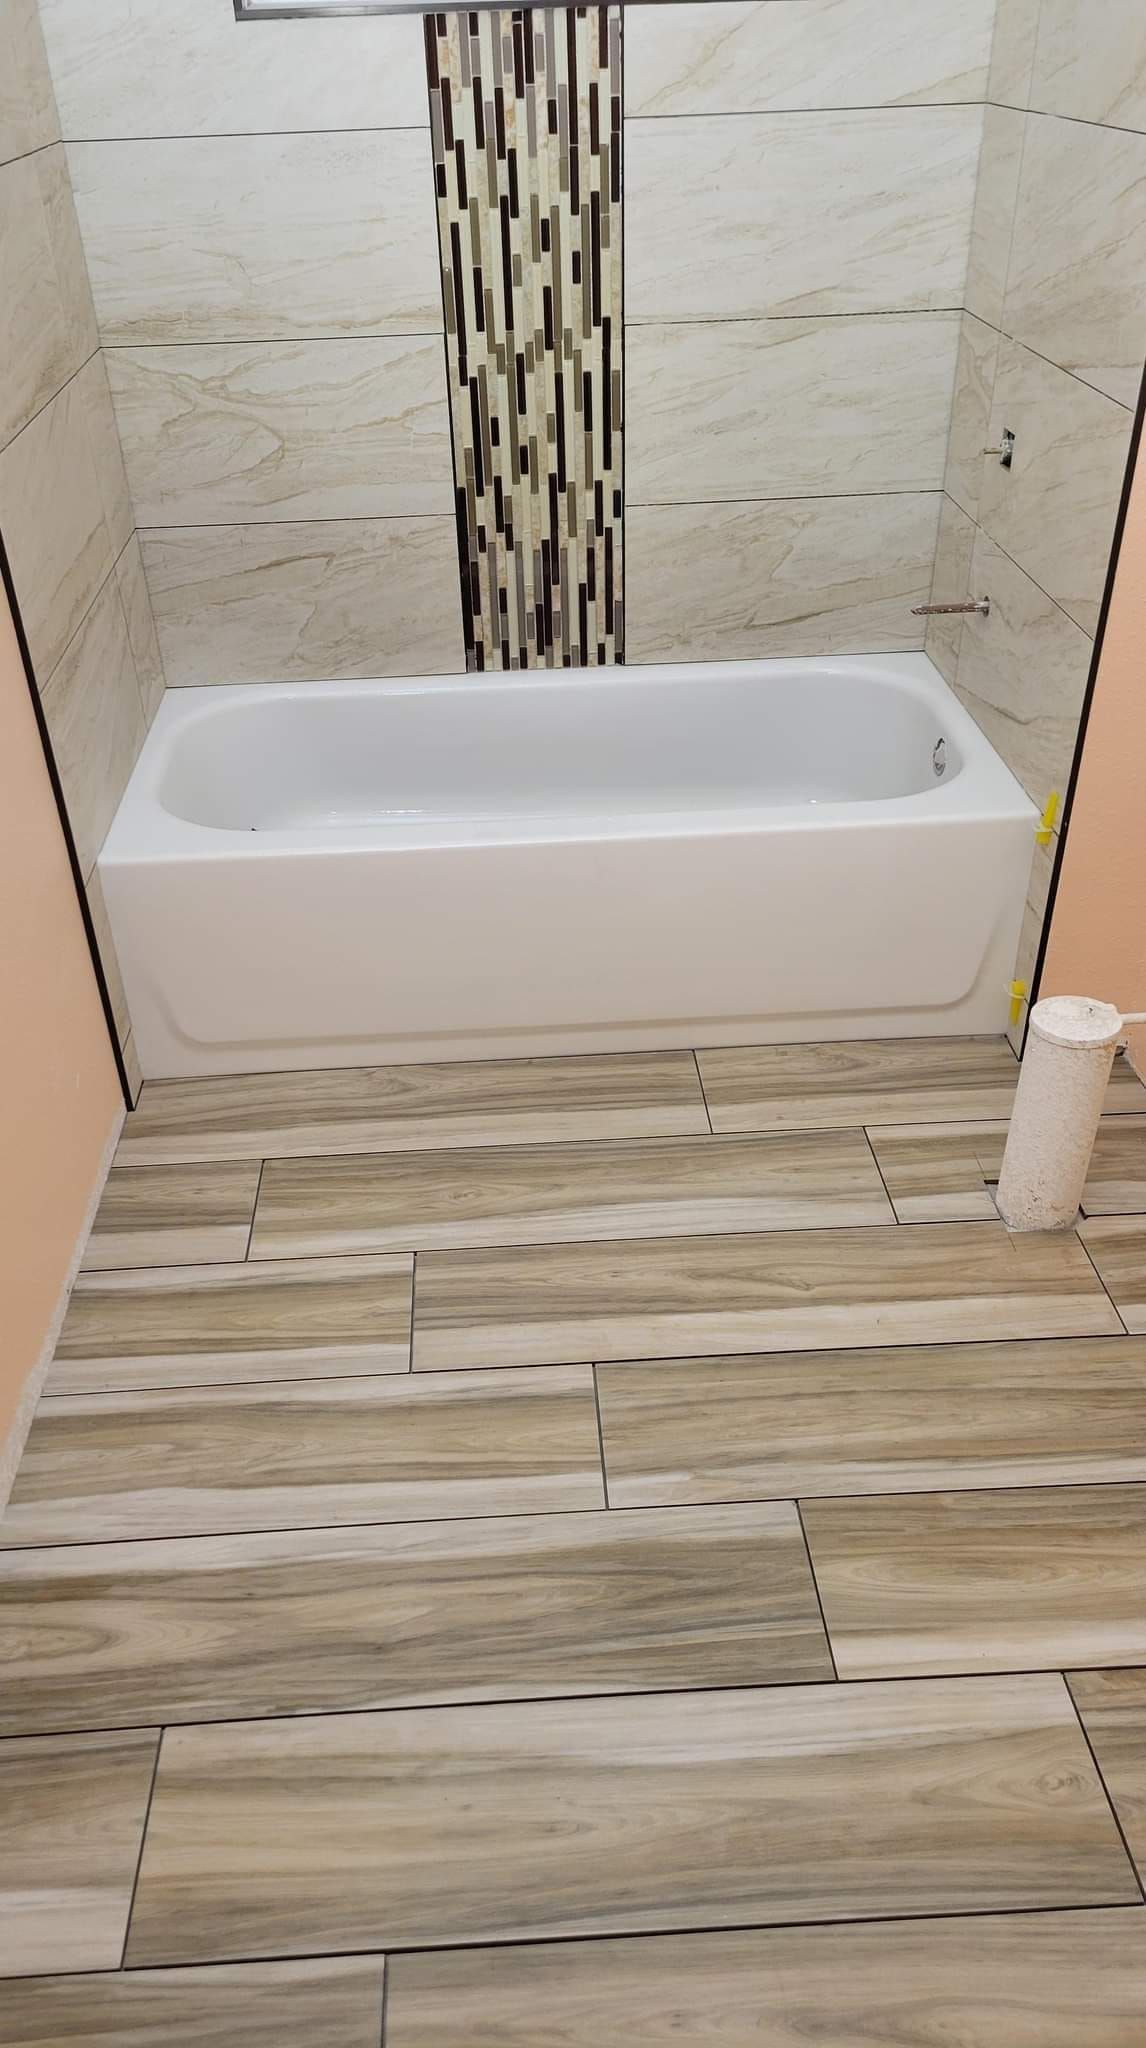 A bathroom with a bathtub and a wooden floor.